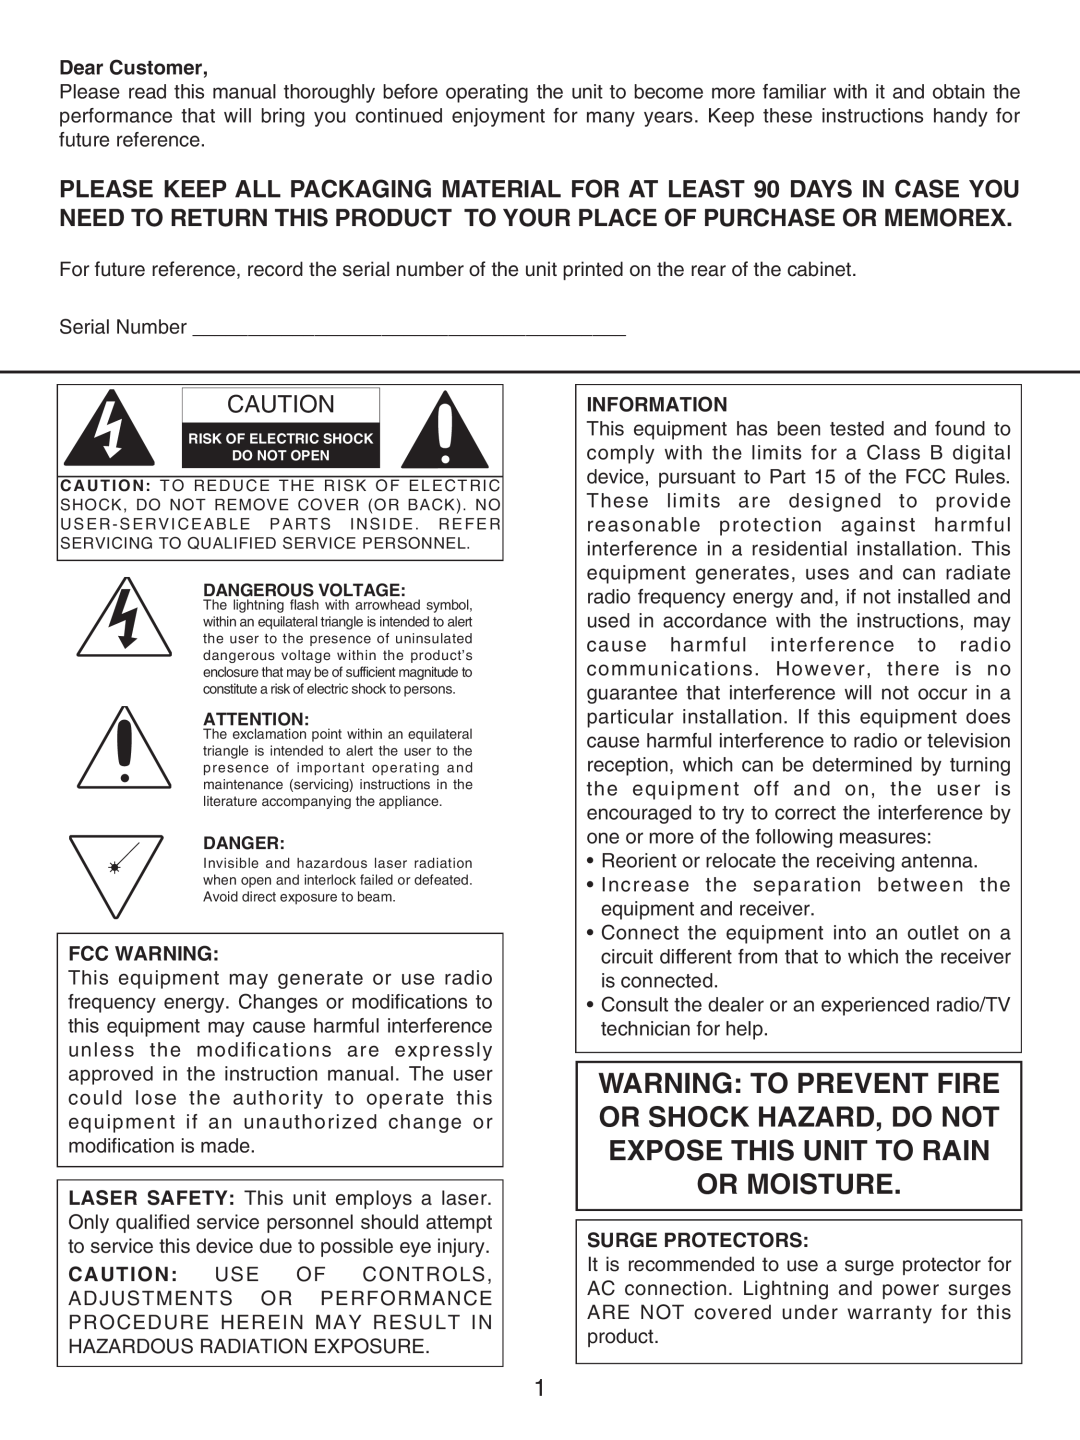 Memorex MKS5627 manual Fcc Warning, Information, Surge Protectors 